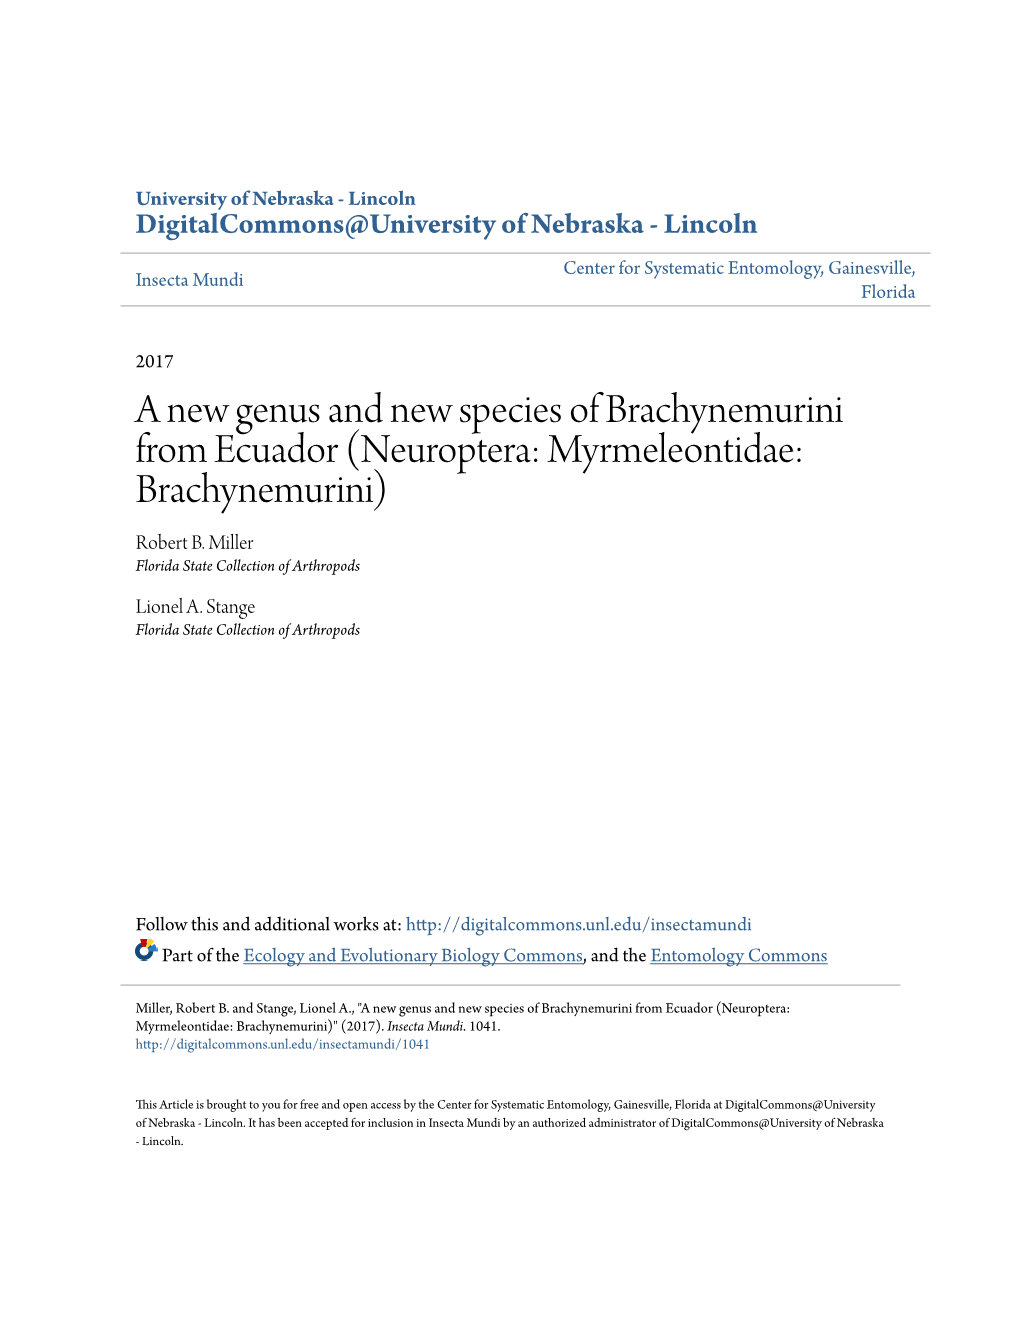 Neuroptera: Myrmeleontidae: Brachynemurini) Robert B